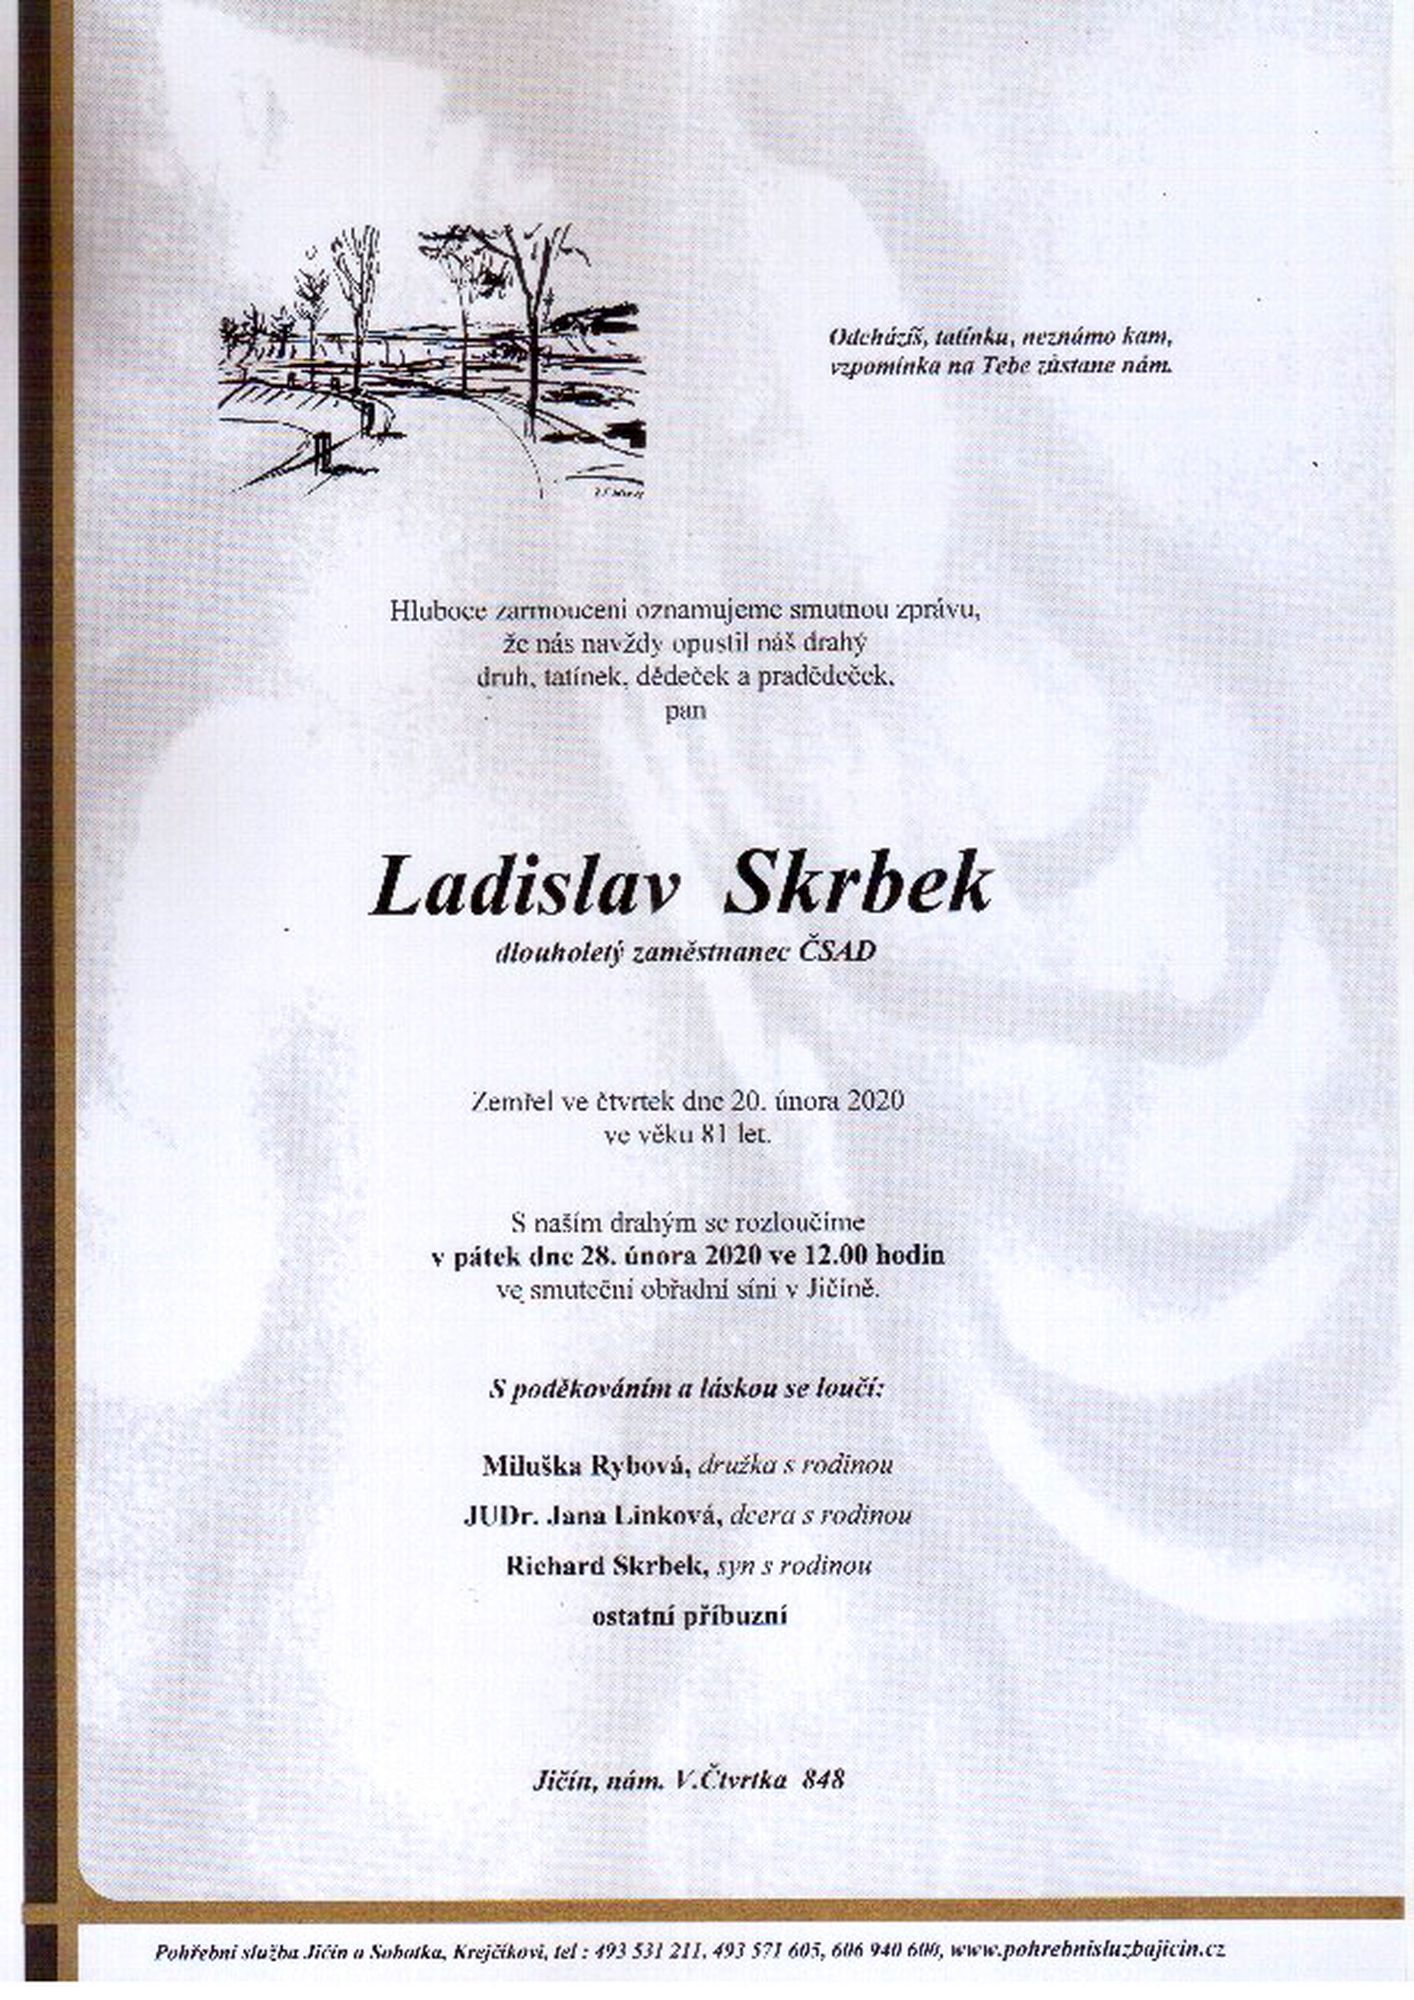 Ladislav Skrbek